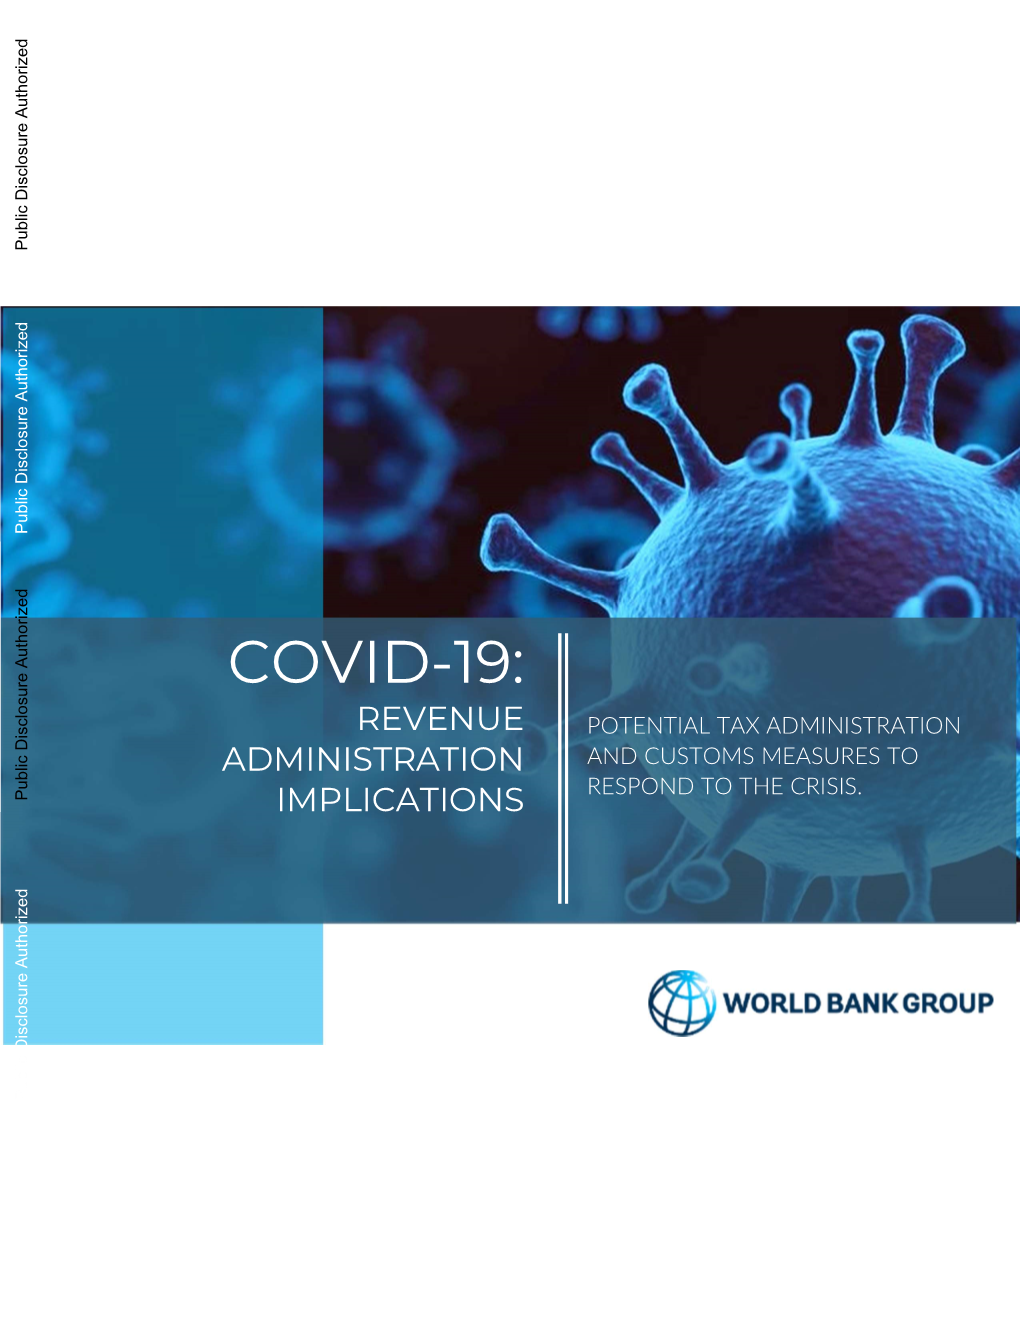 COVID-19 : Revenue Administration Implications